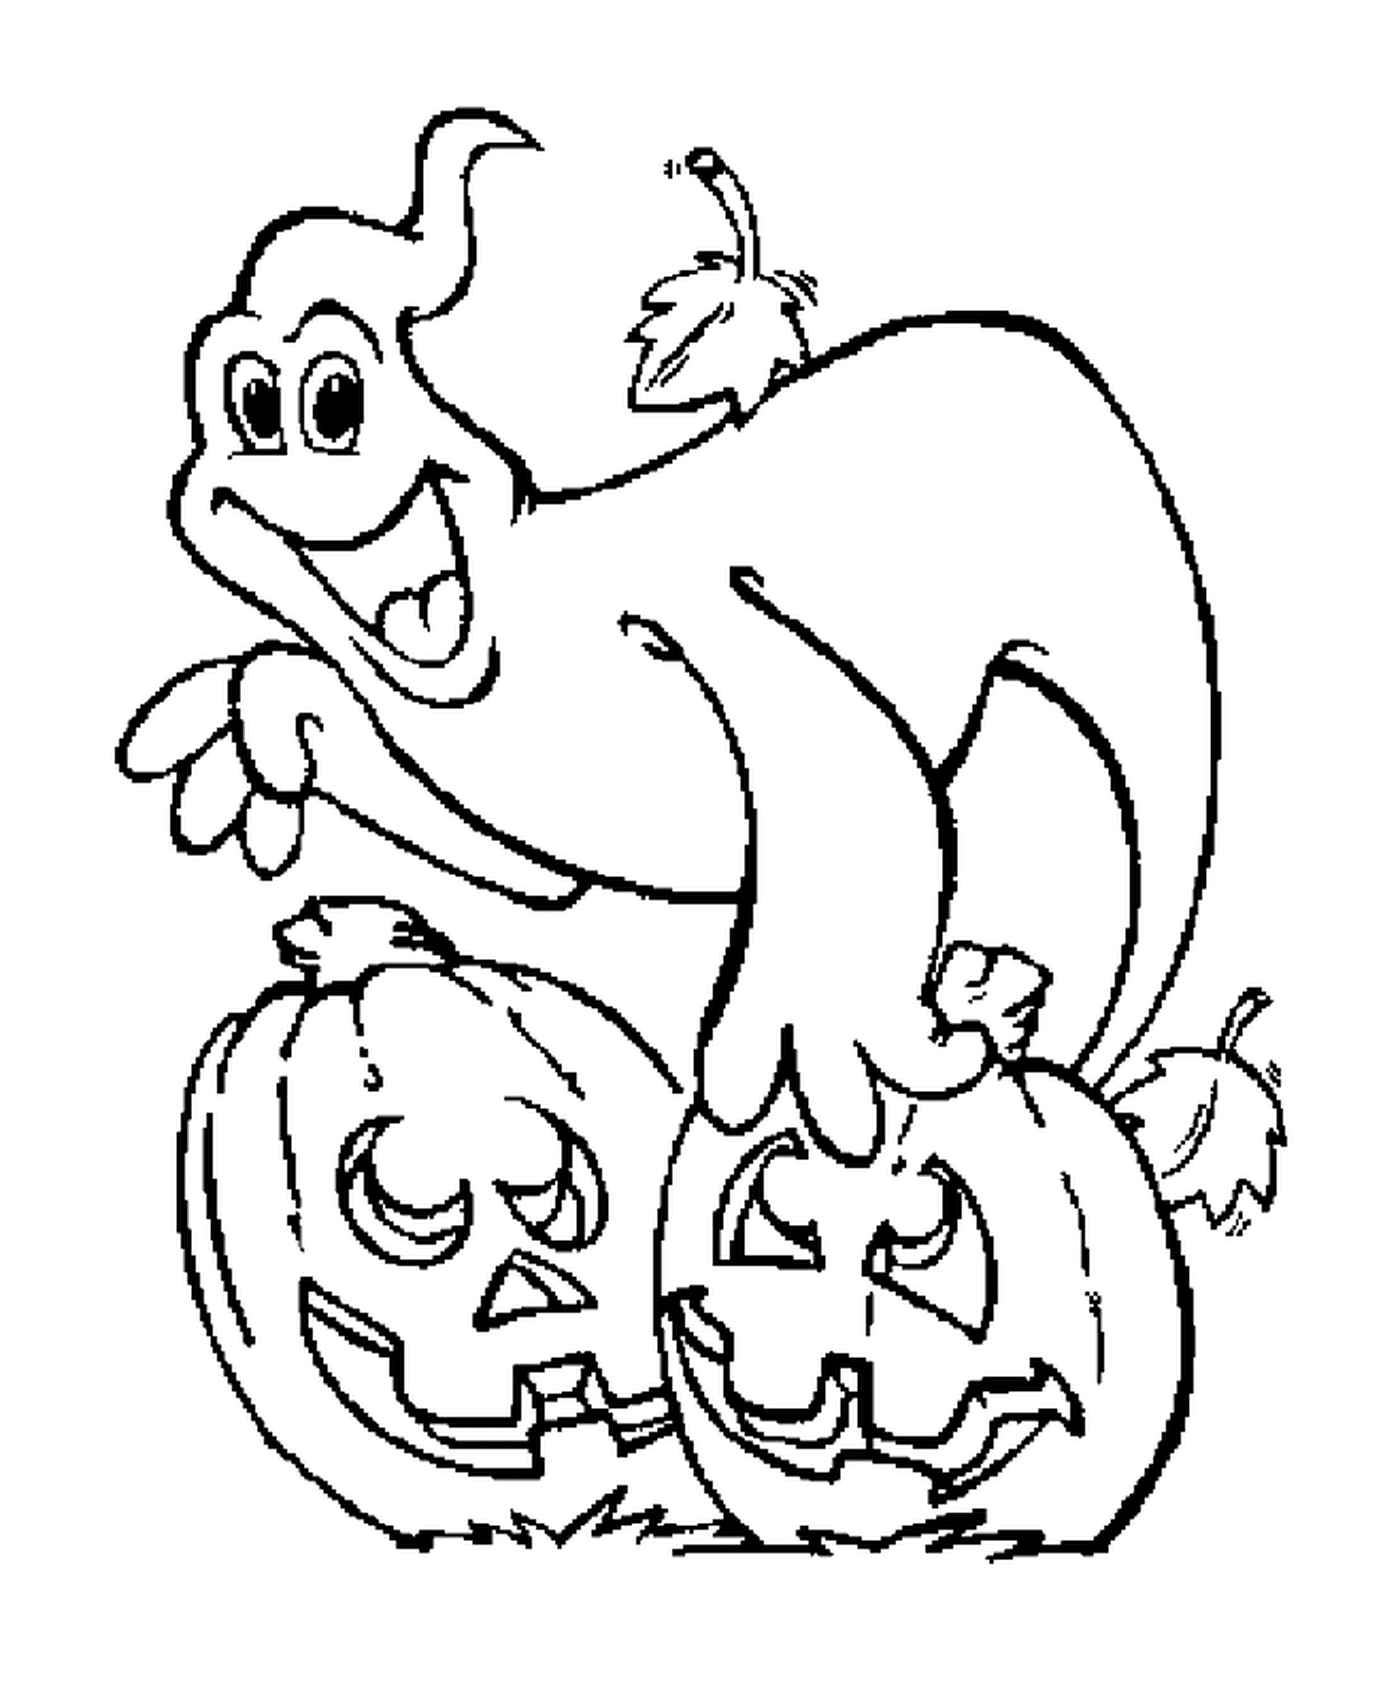  Un fantasma e due zucche di Halloween 